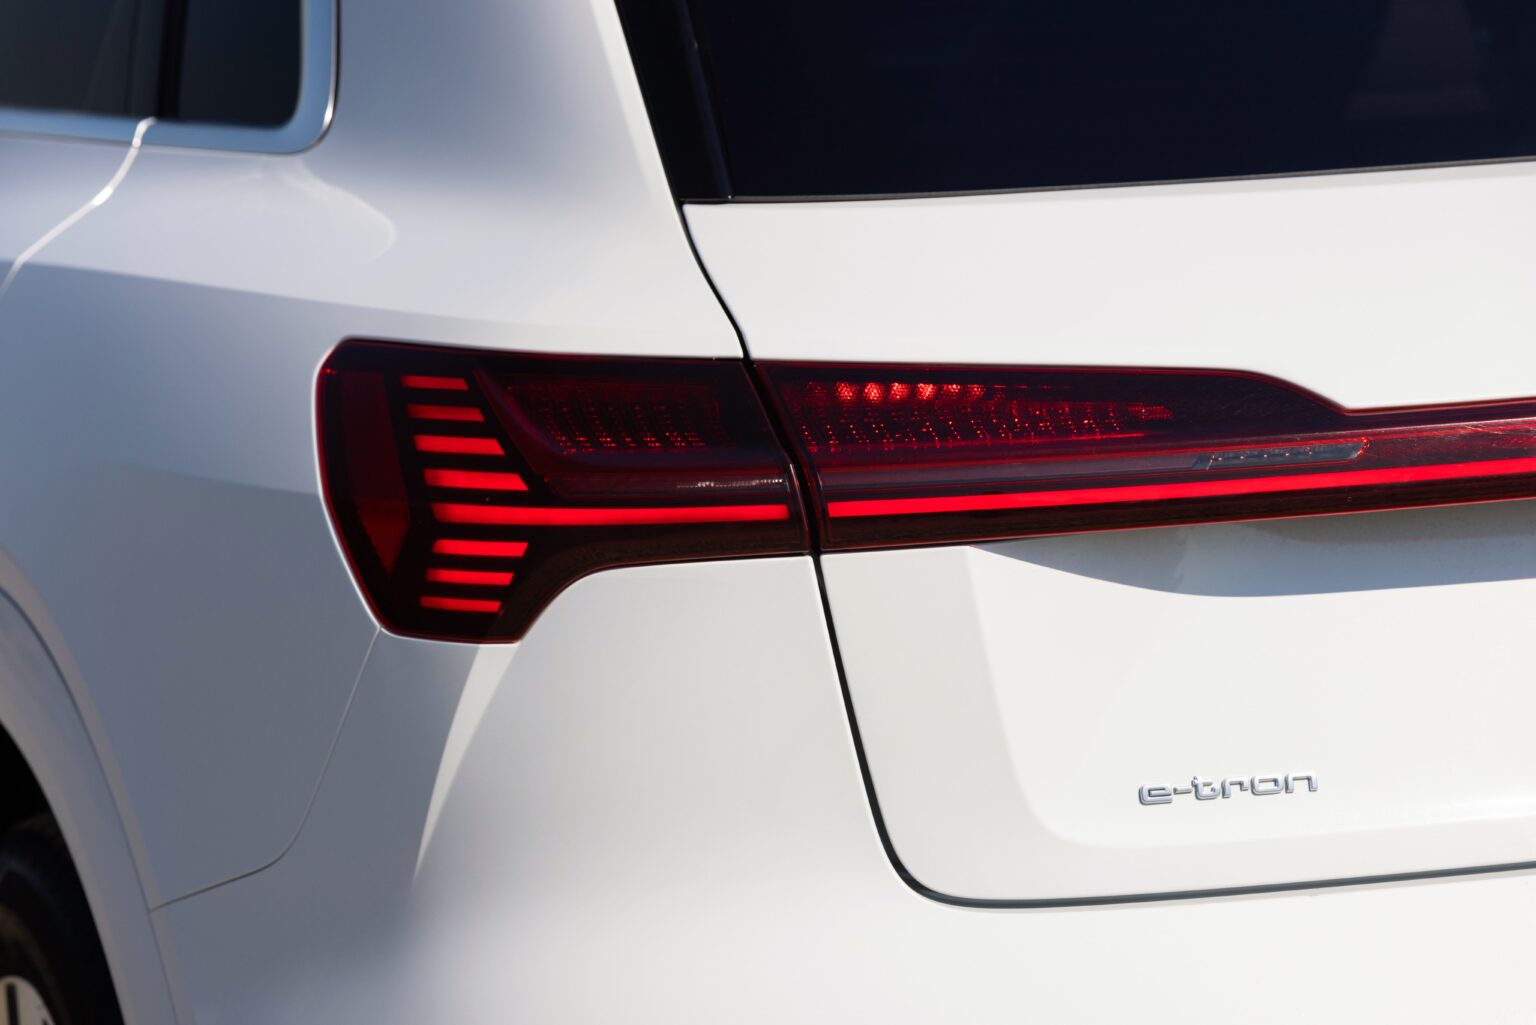 2023 Audi e-tron Exterior Image 31